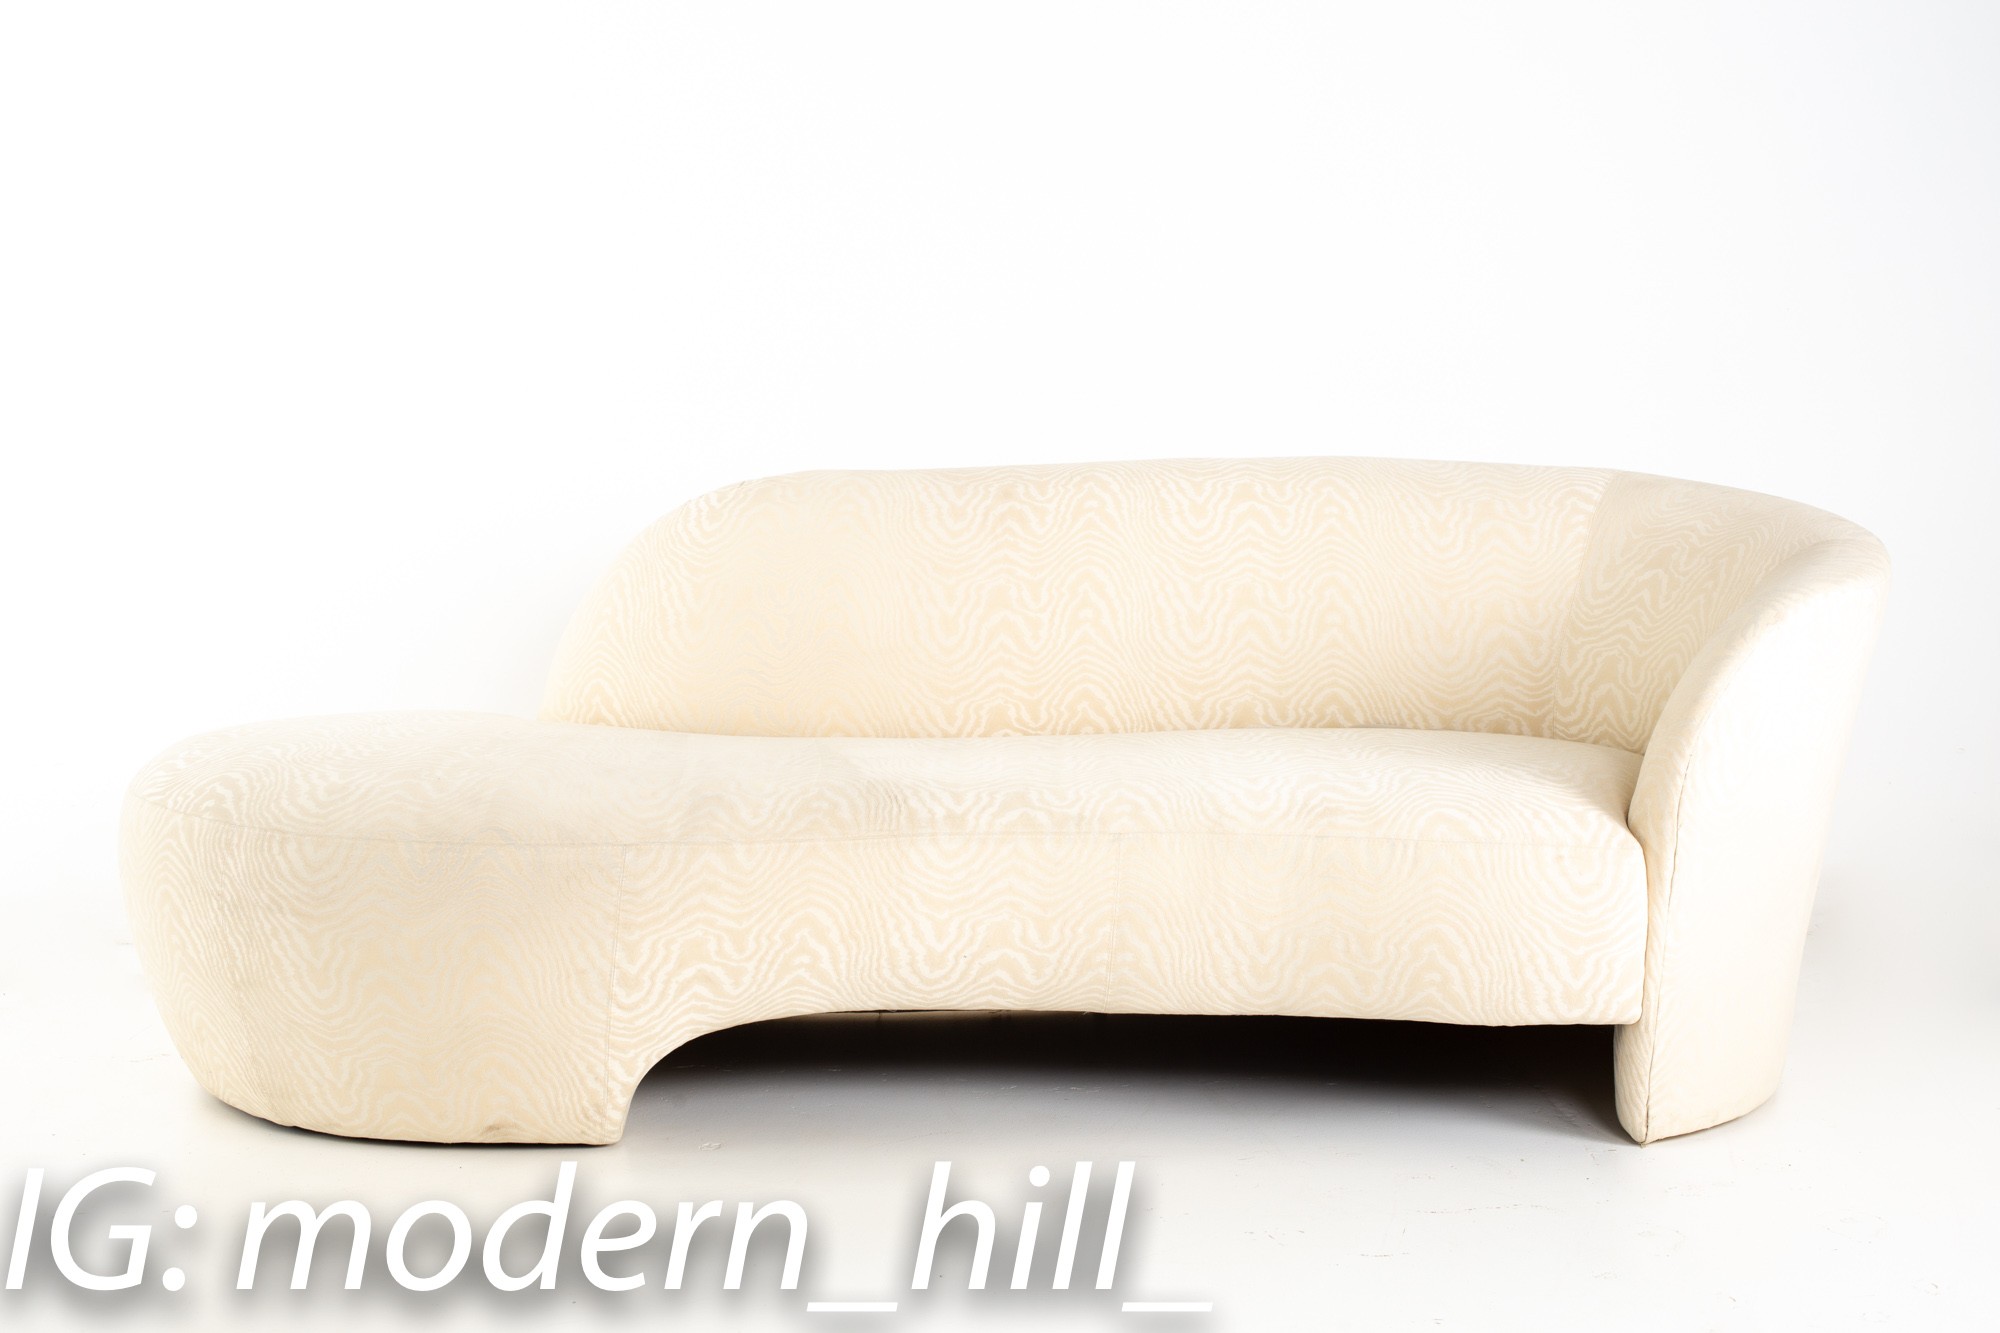 Straight View of Vladimir Kagan Mid Century Cloud Chaise Sofa